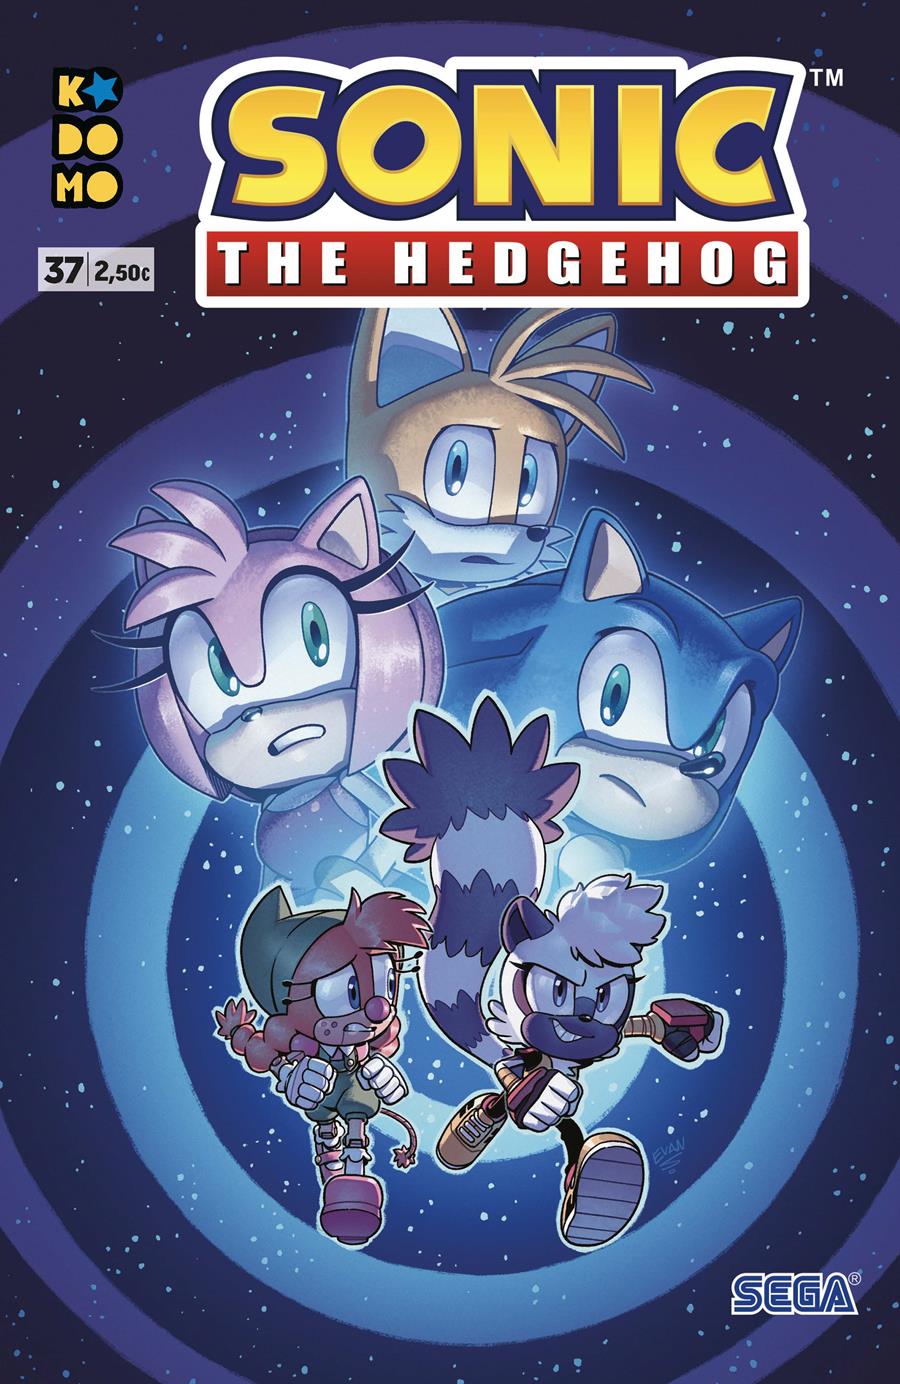 Sonic The Hedgehog núm. 37 | N0822-ECC50 | Adam Bryce Thomas / Evan Stanley | Terra de Còmic - Tu tienda de cómics online especializada en cómics, manga y merchandising